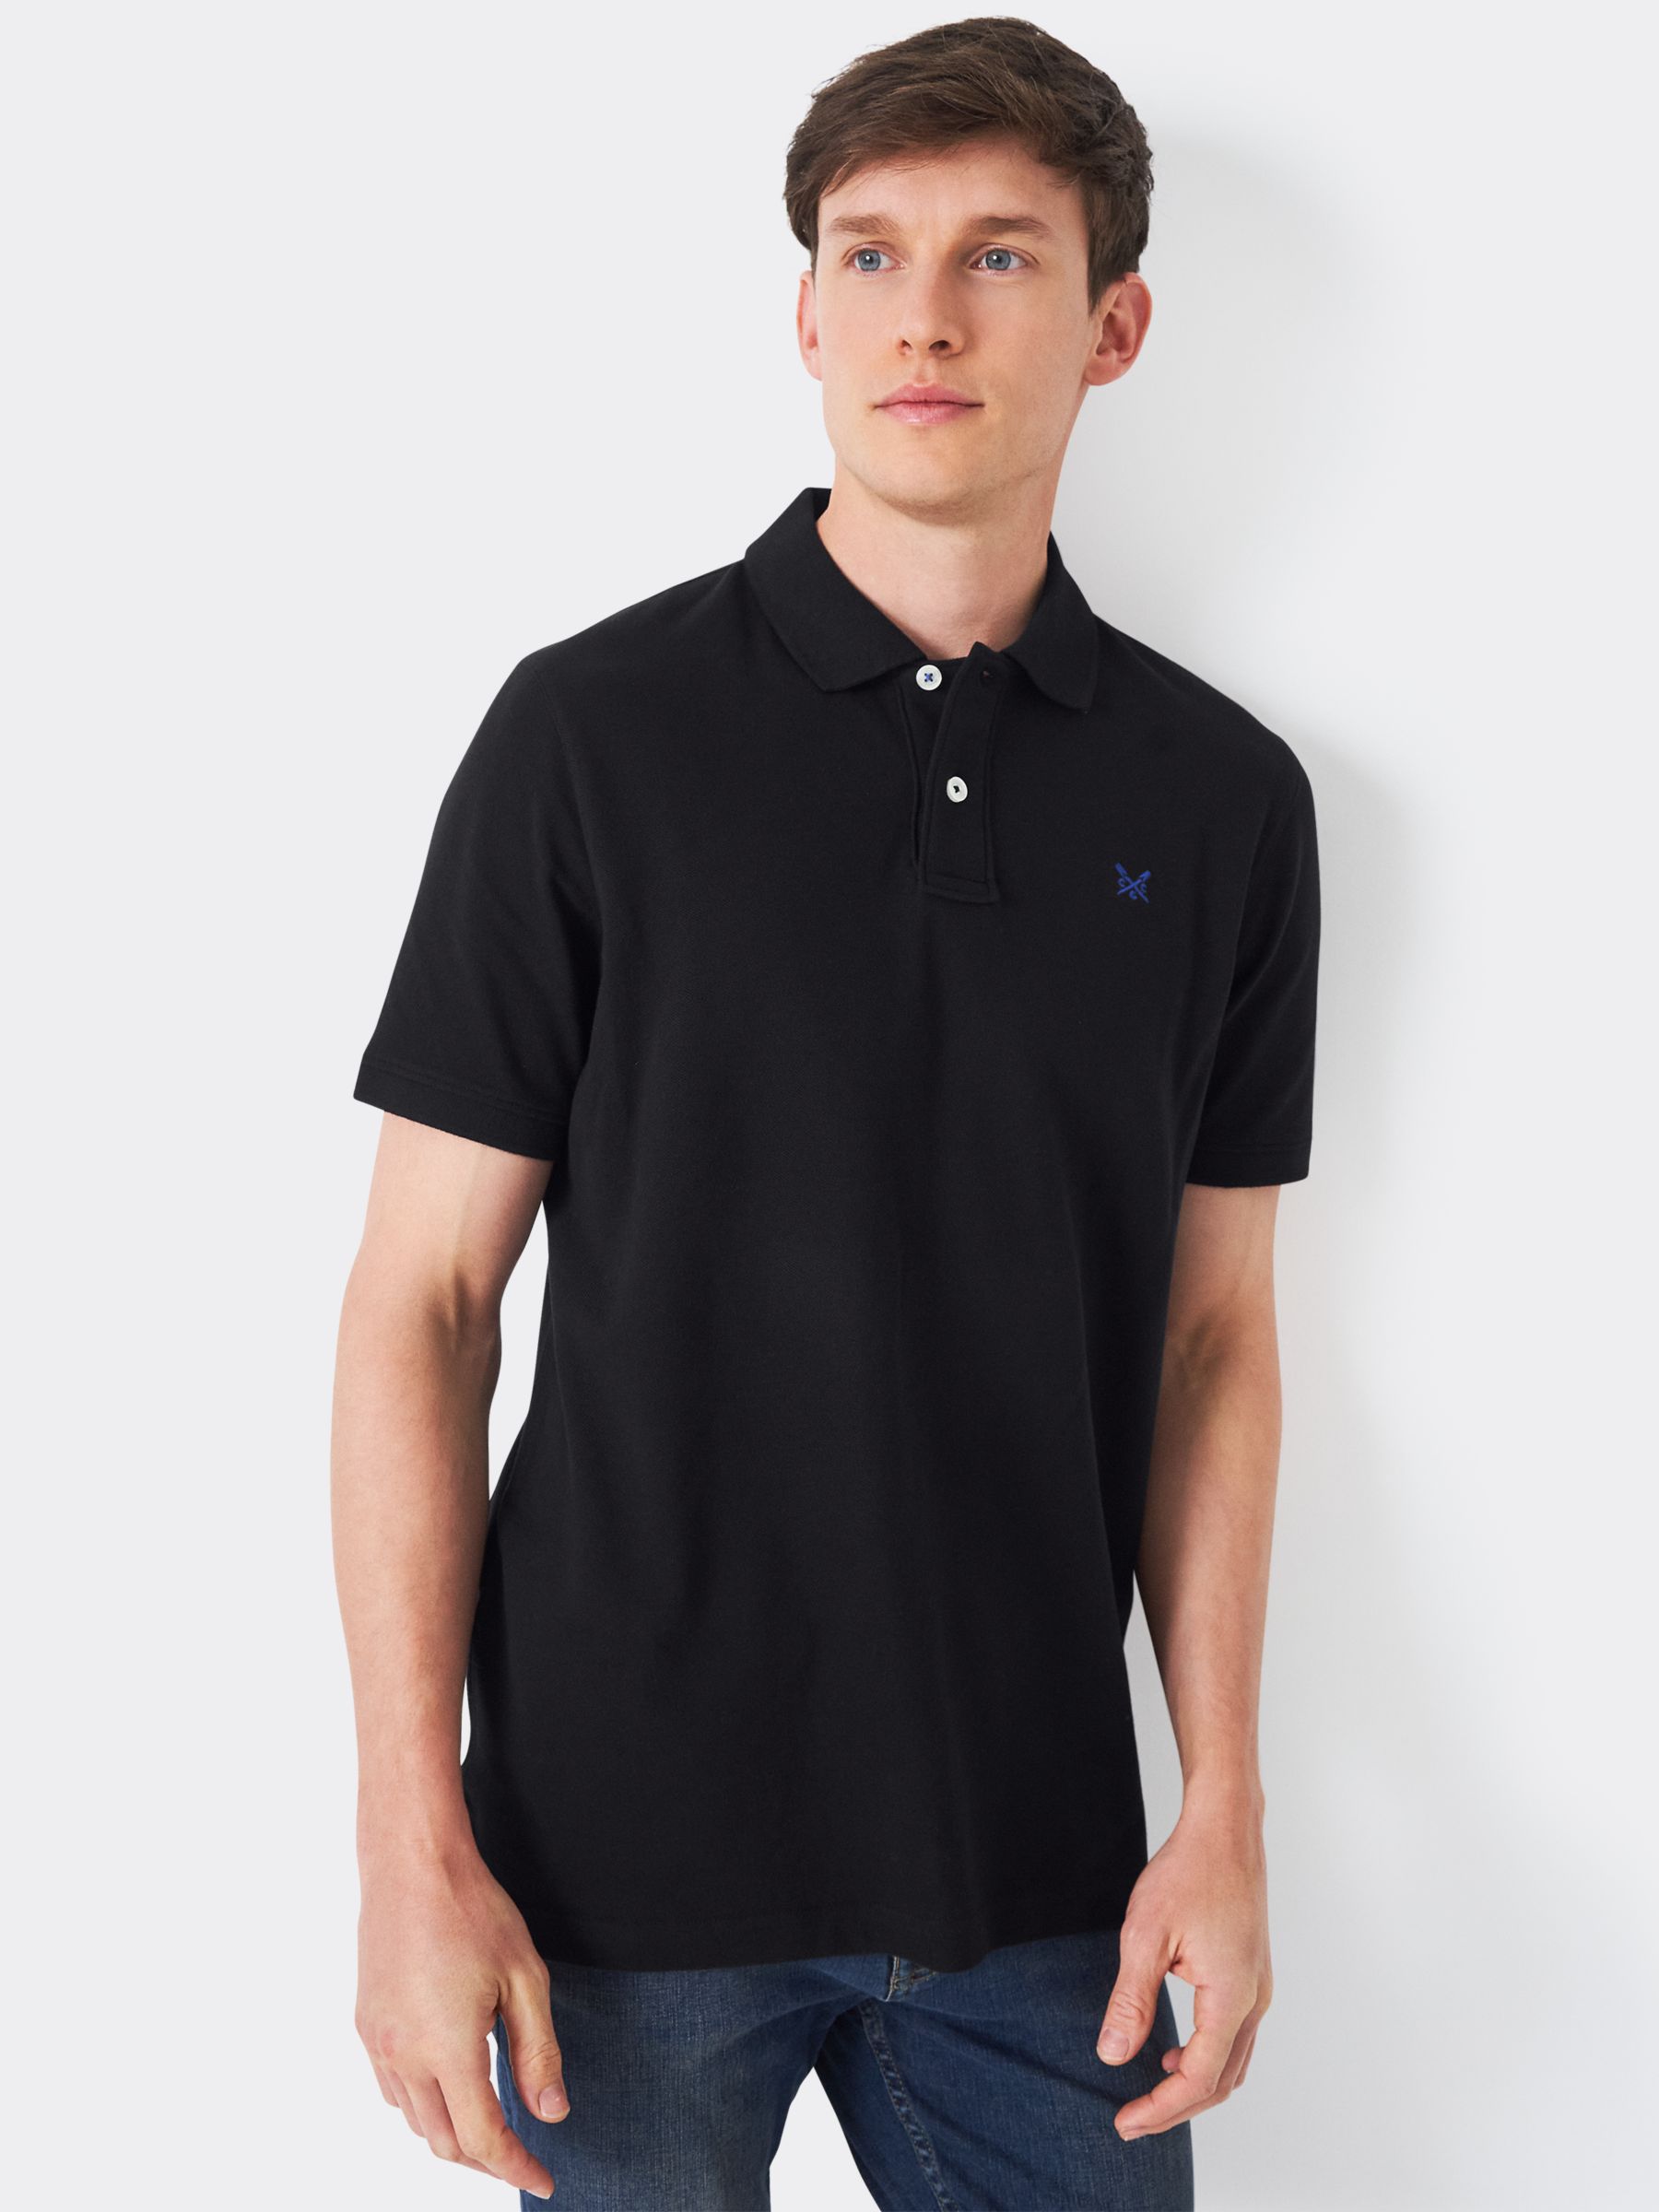 Crew Clothing Classic Pique Polo Shirt, Black at John Lewis & Partners